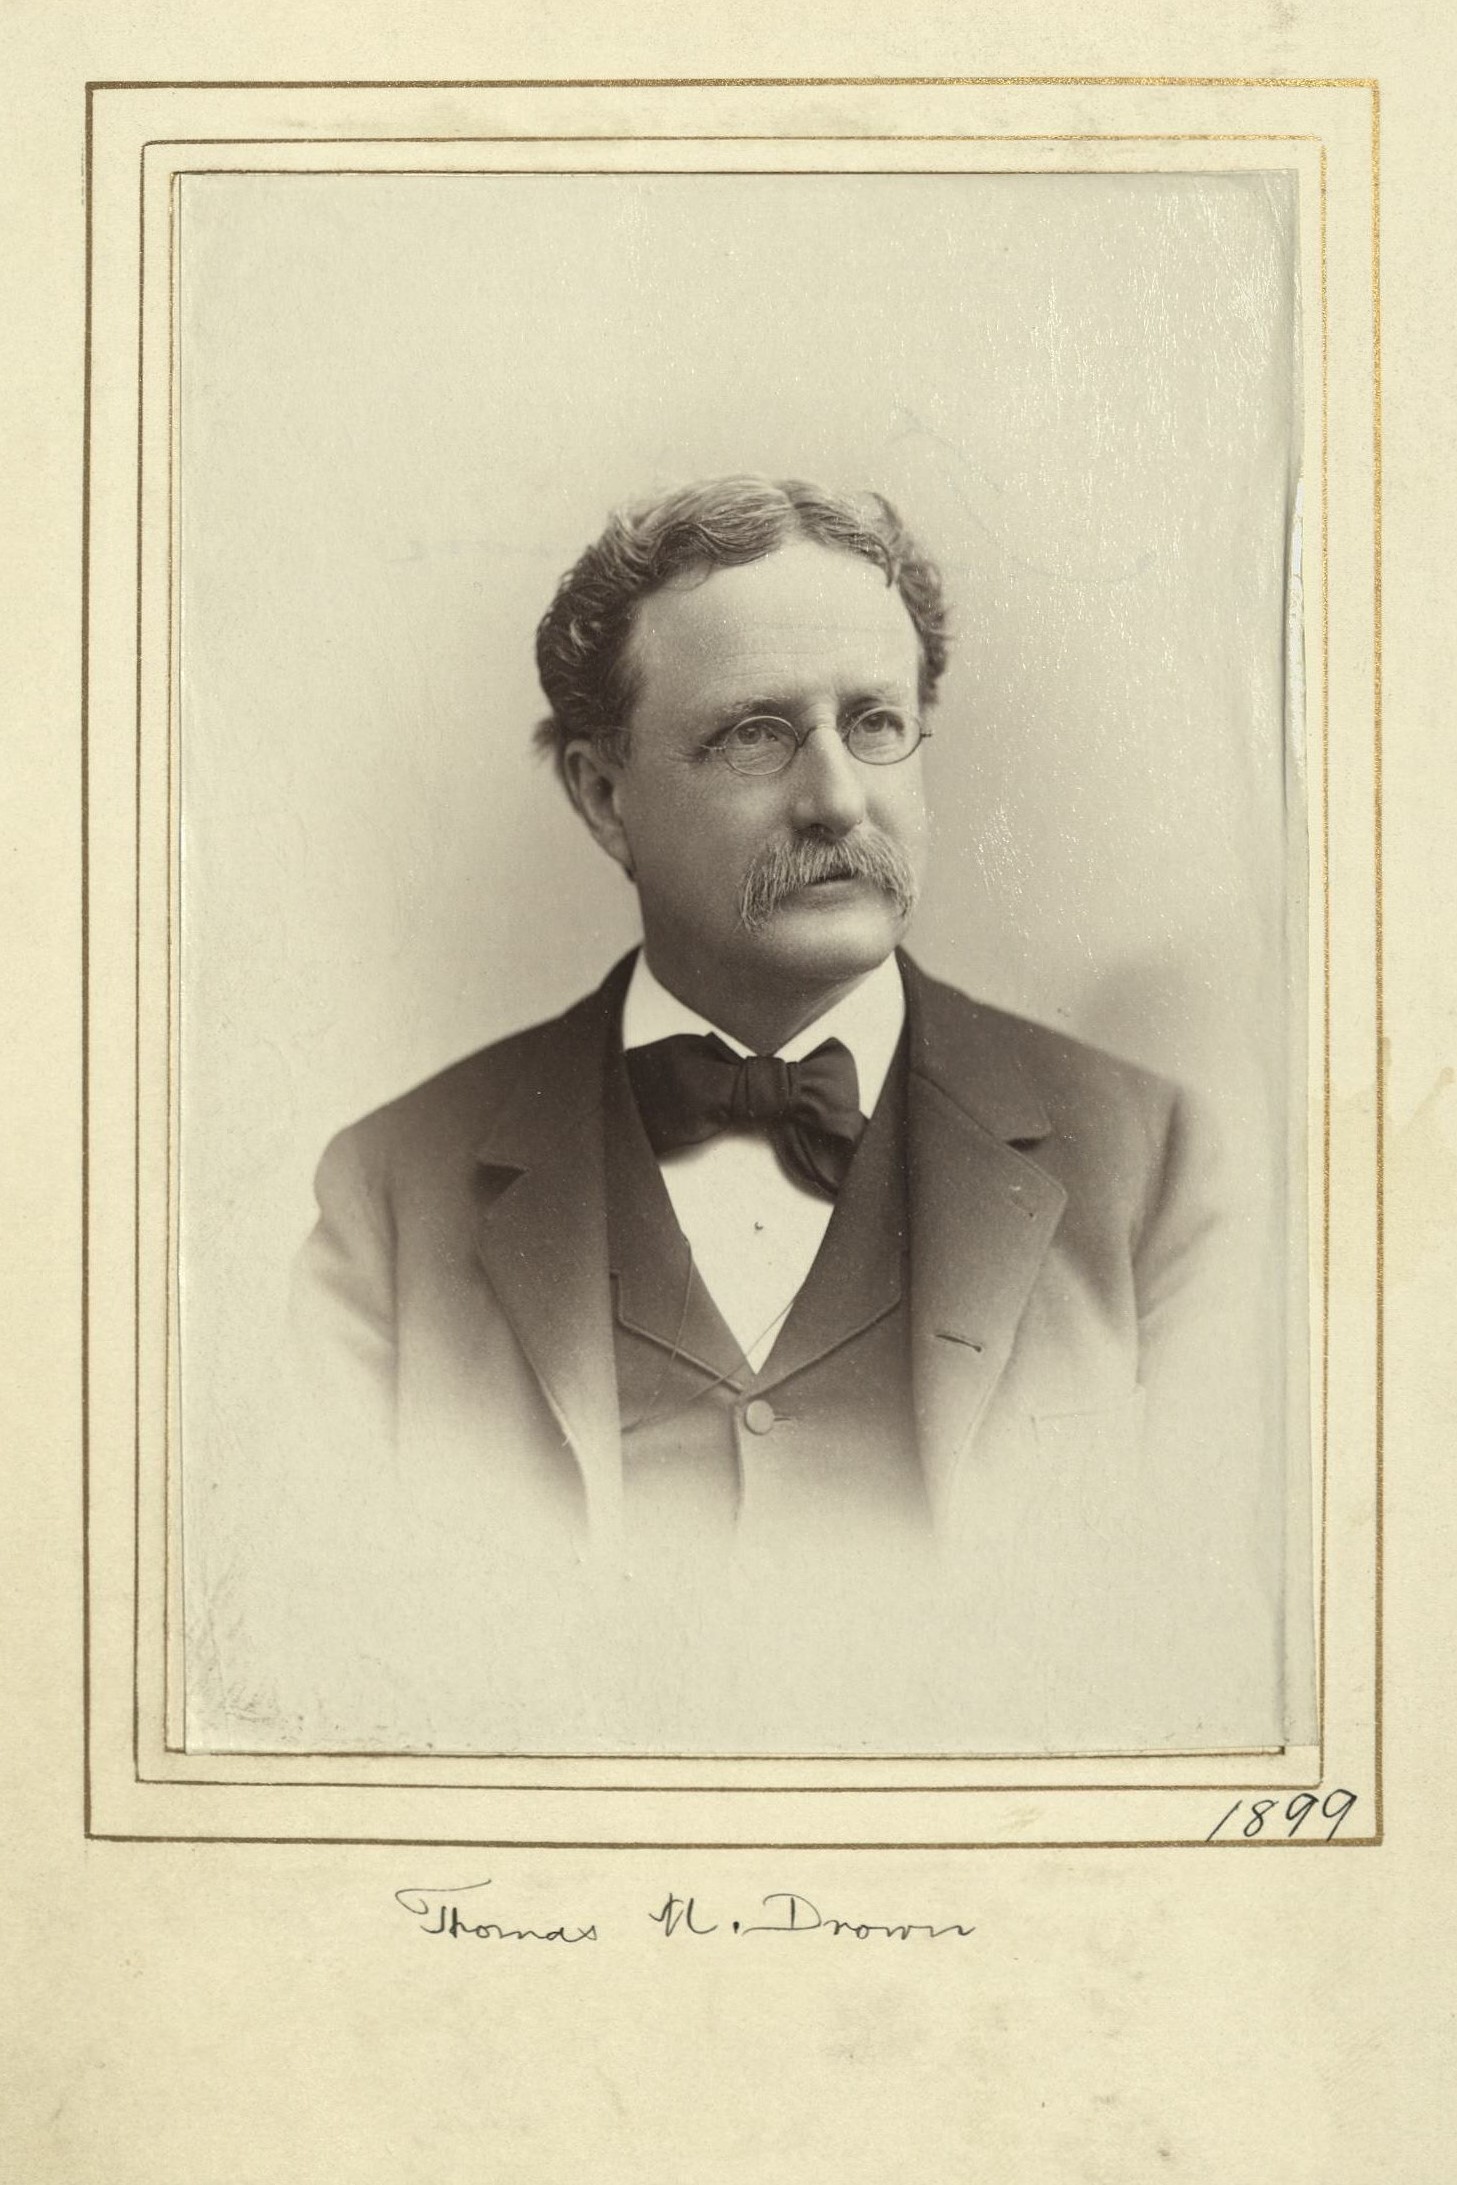 Member portrait of Thomas M. Drown